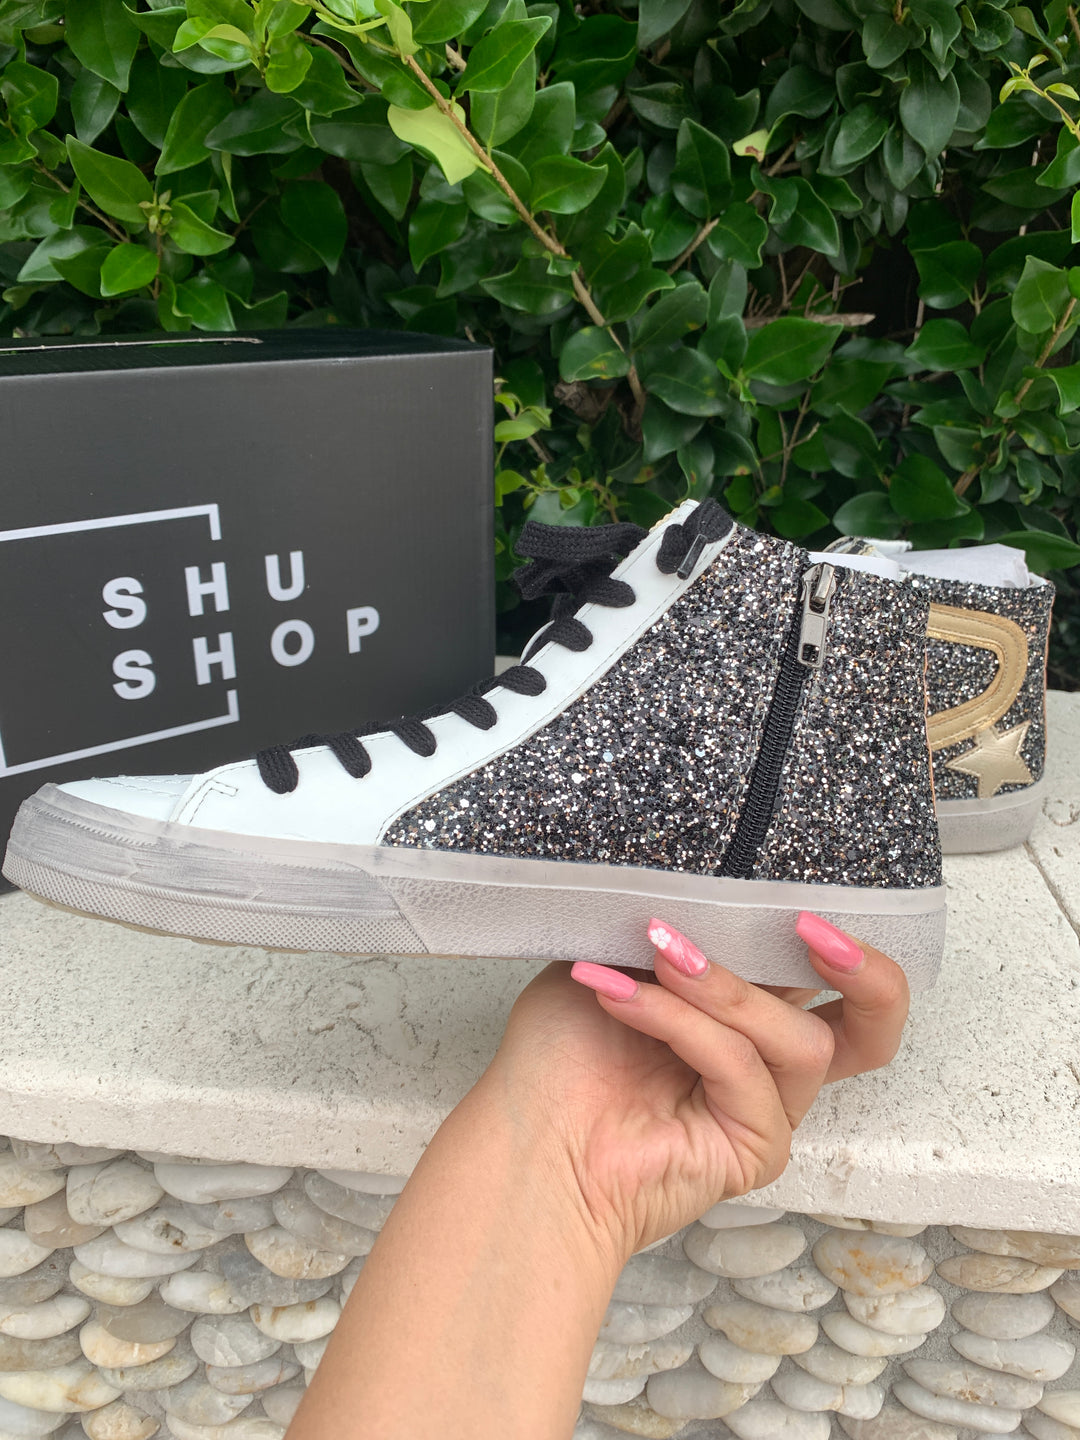 Shushop Hightop Sparkle Sneakers at Leaf Boutique 8